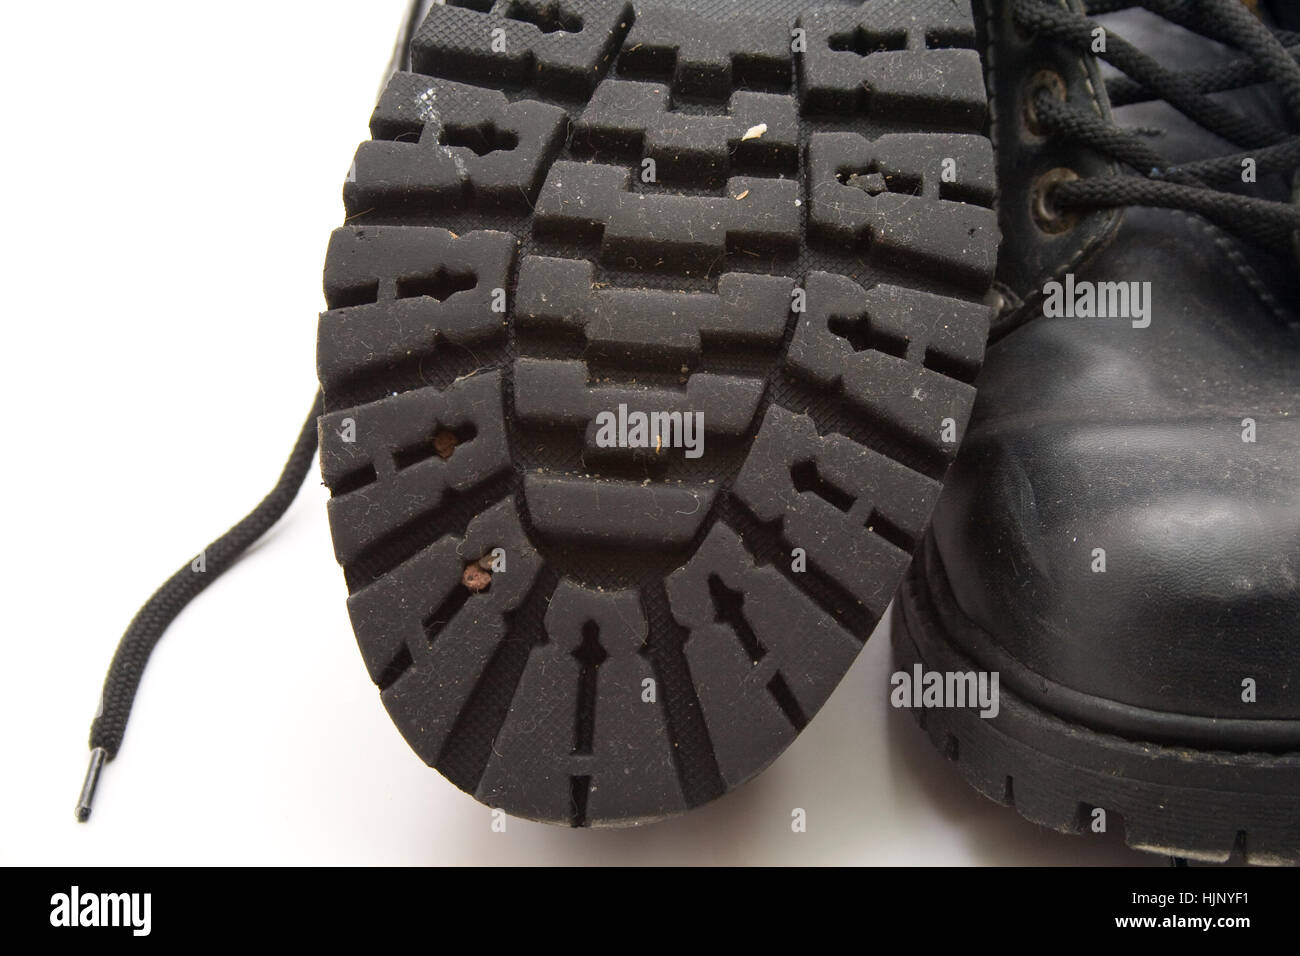 shoes, shoelace, shoes, convenient, sole, shoelace, boots and shoes, heavy, Stock Photo